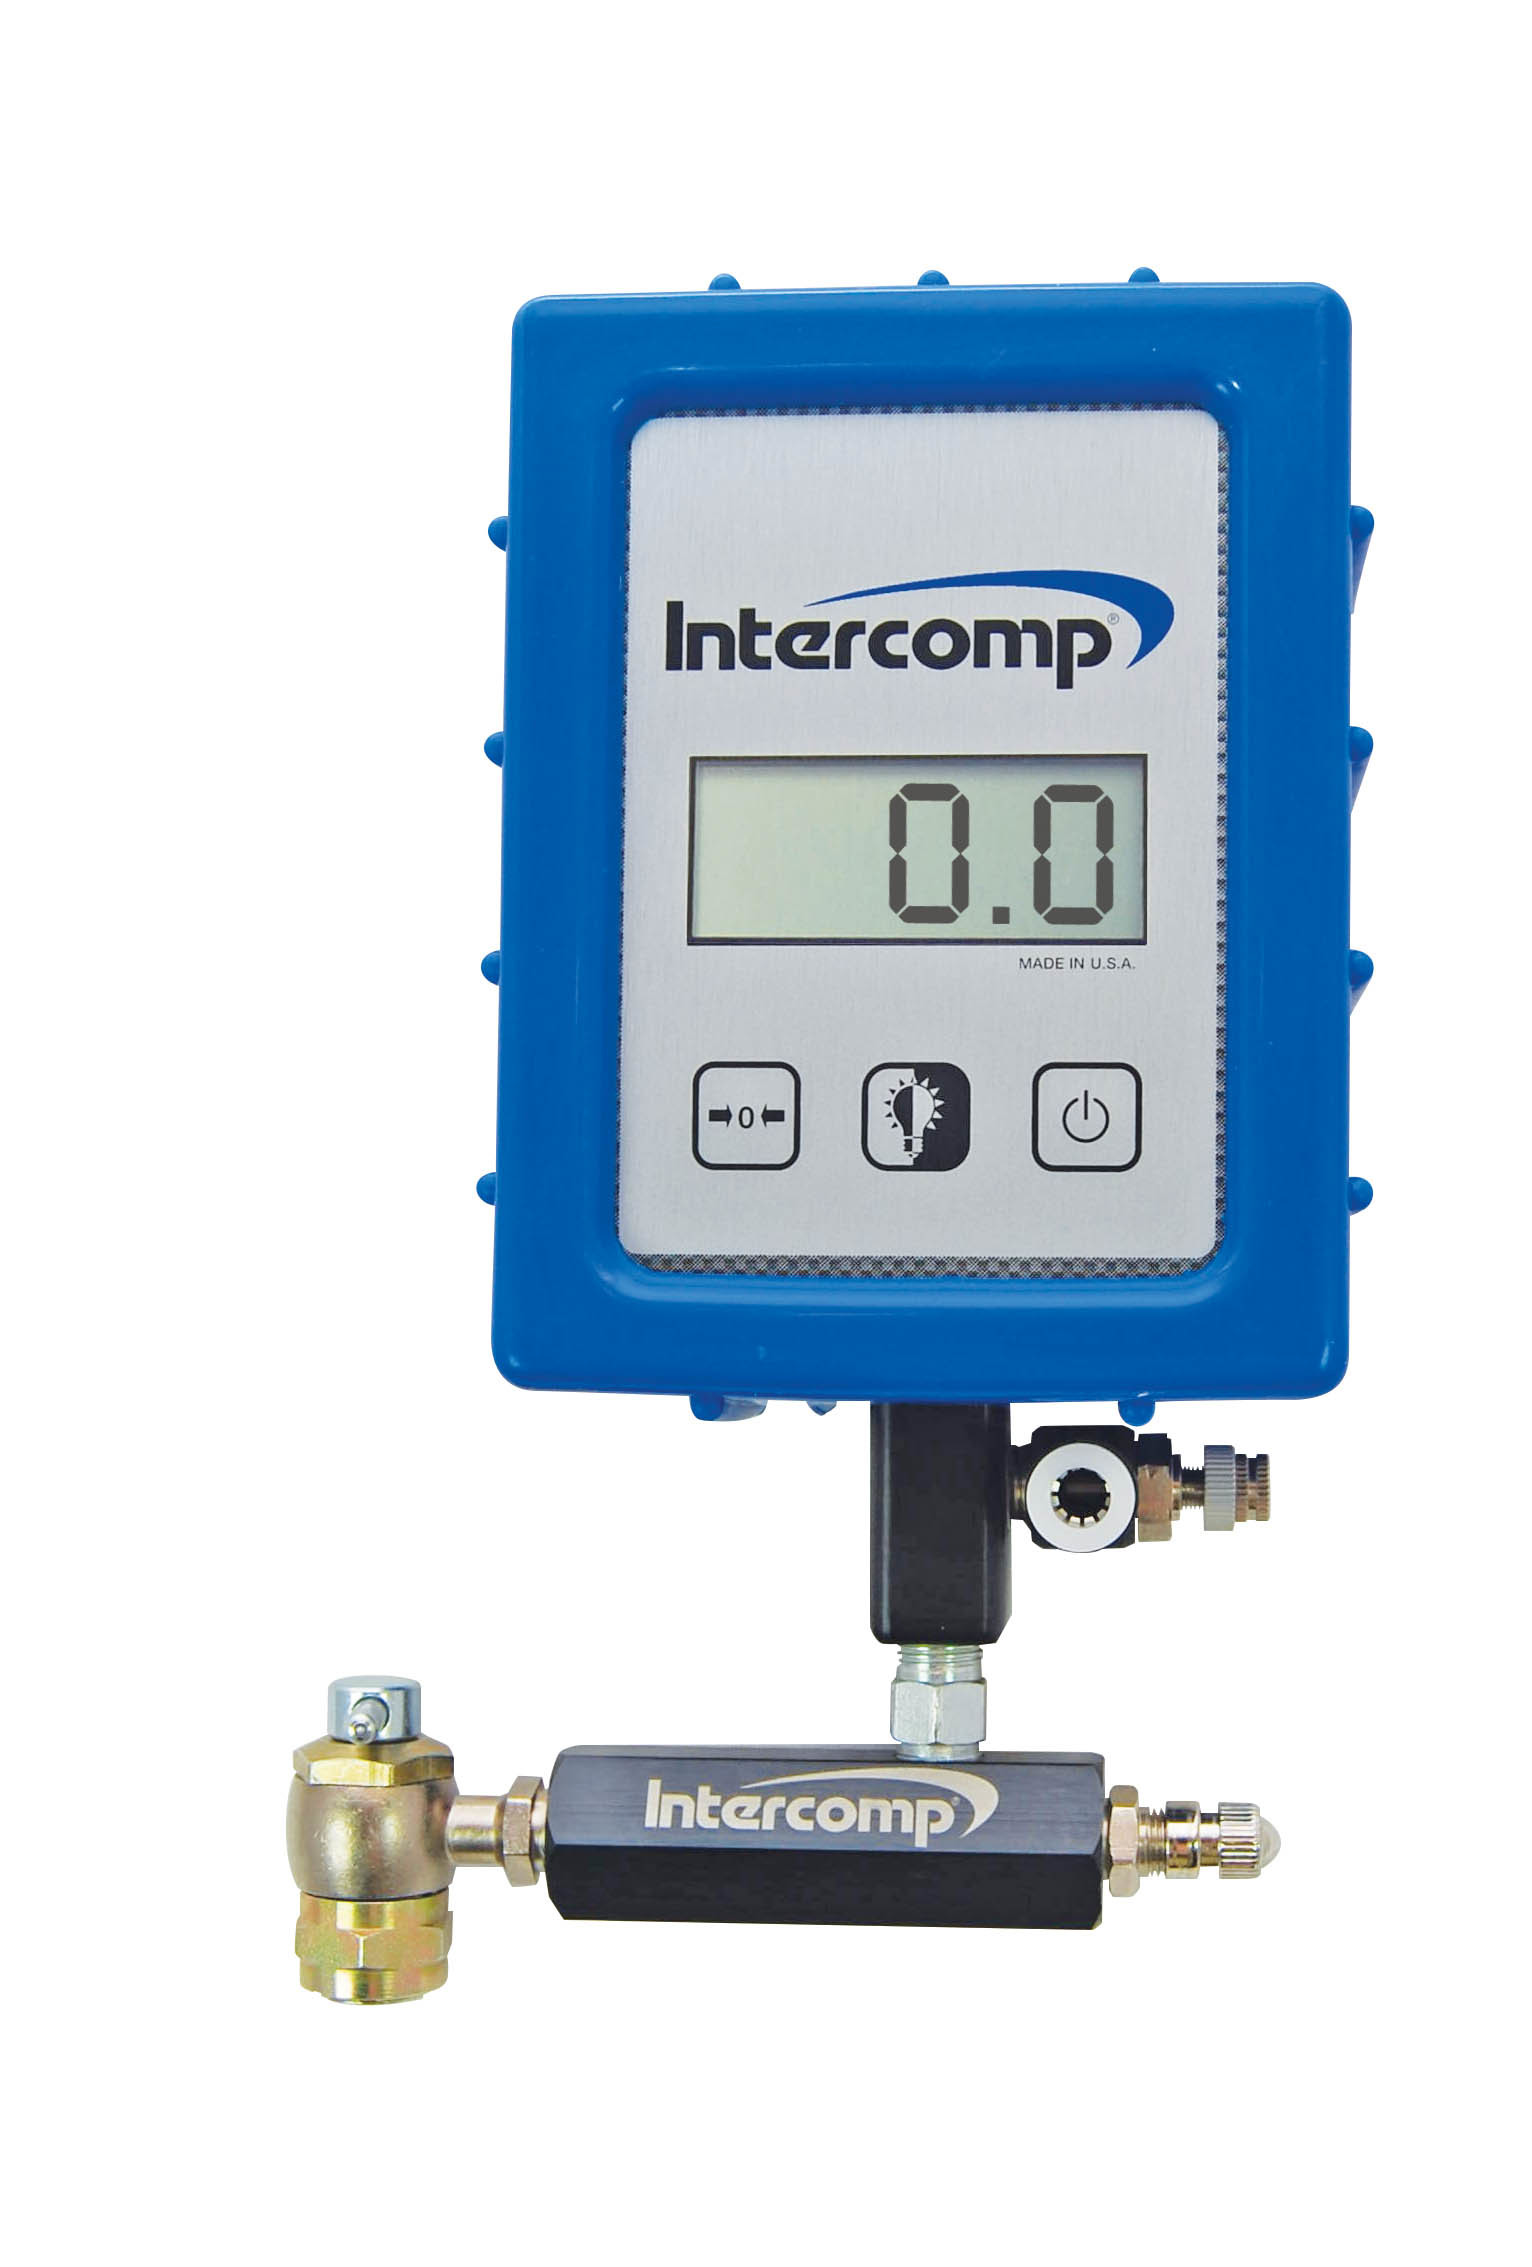 Intercomp 100675 Shock Inflator and Gauge, 0-300 psi, Mechanical, Digital, Schrader Valve Adapter, Kit